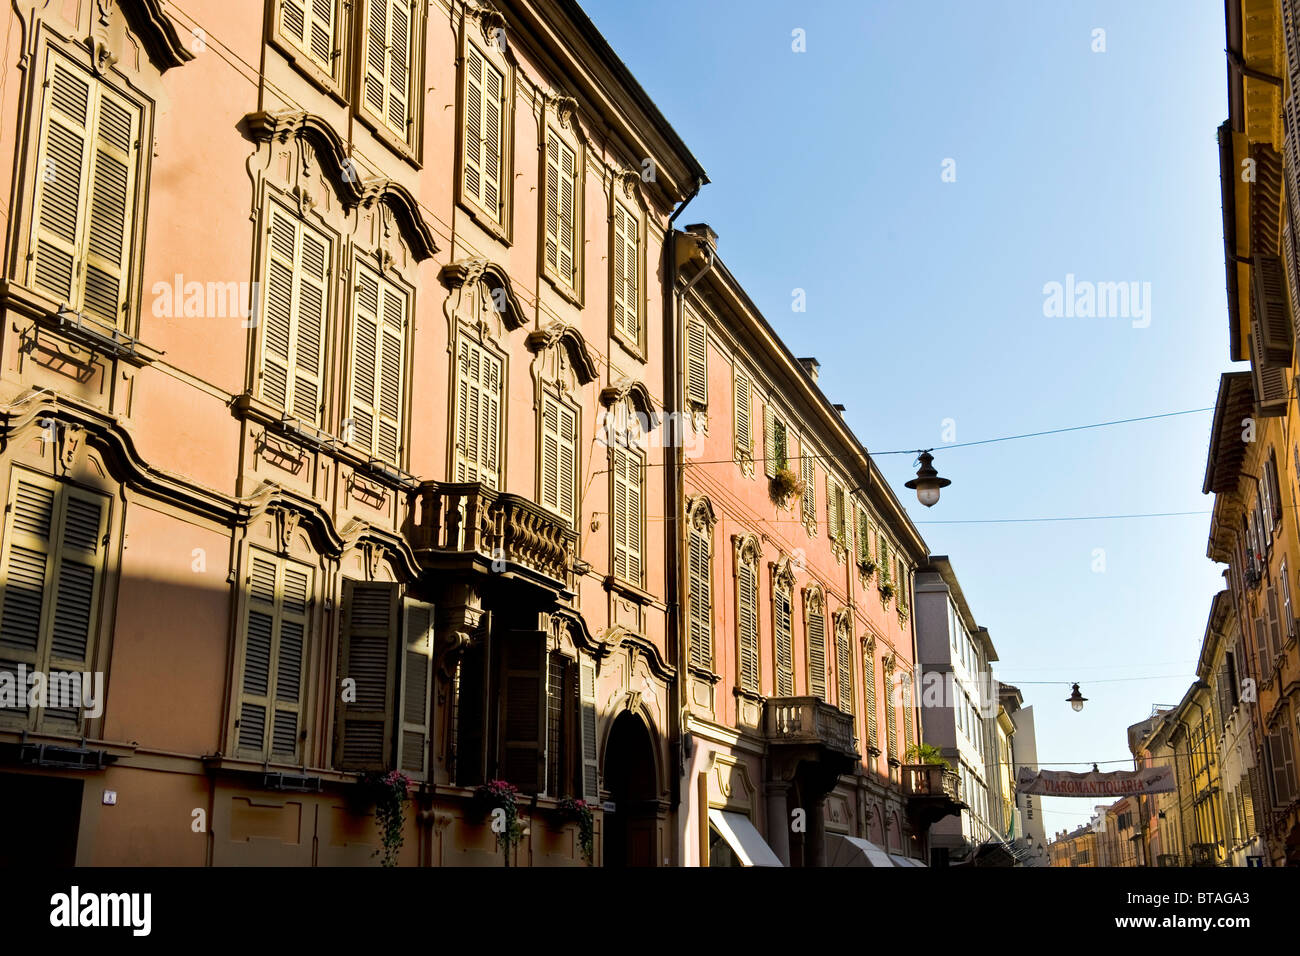 Via Emilia, Reggio Emilia, Italy Stock Photo - Alamy